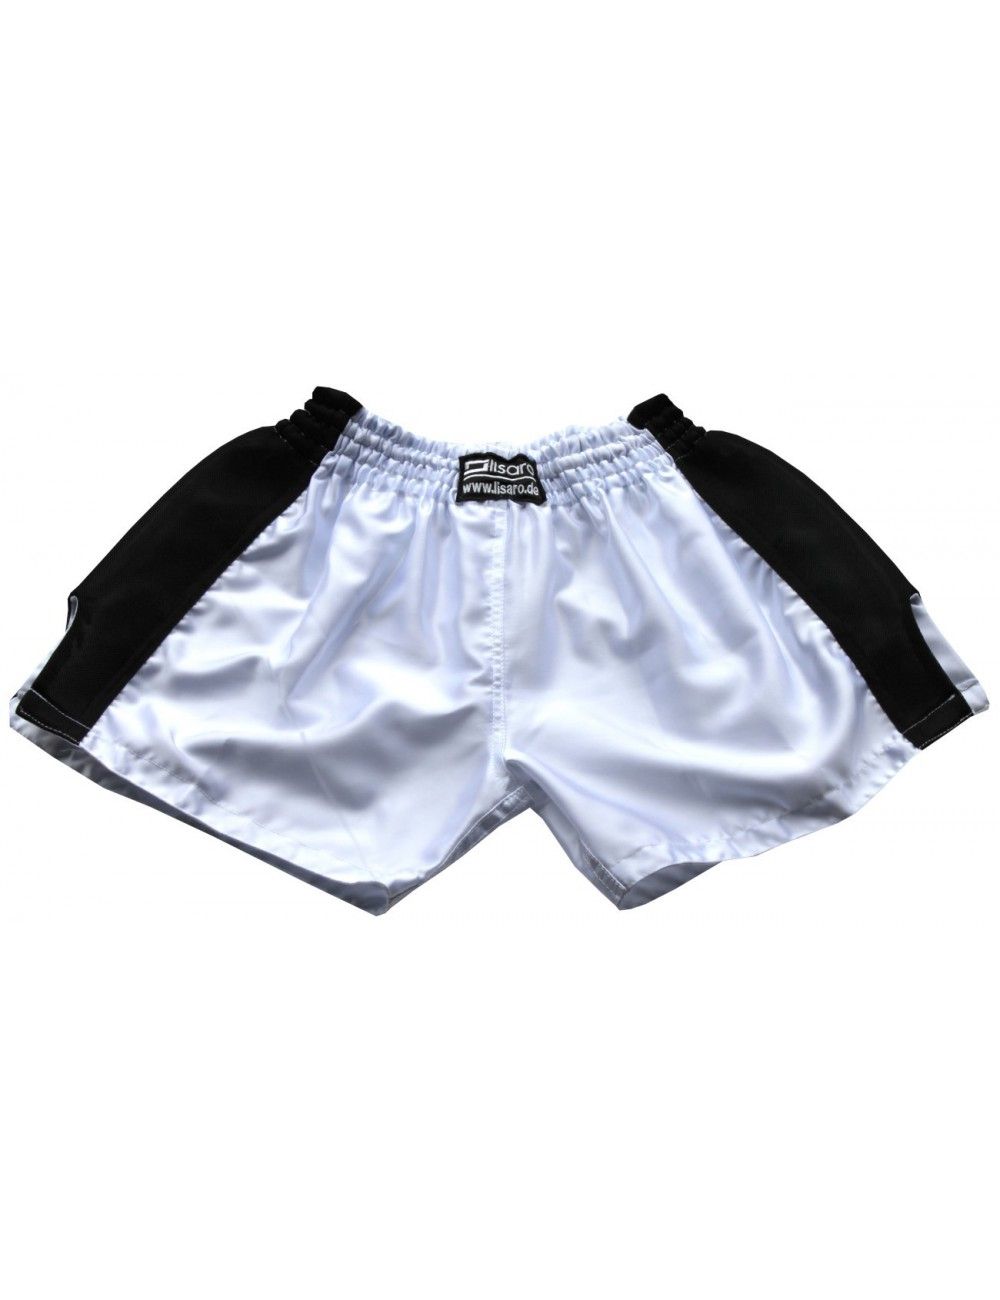 Thaiboxing Short, K-1 Shorts, Kickboxhose mit Satin Mesh in weiß/schwarz - 1